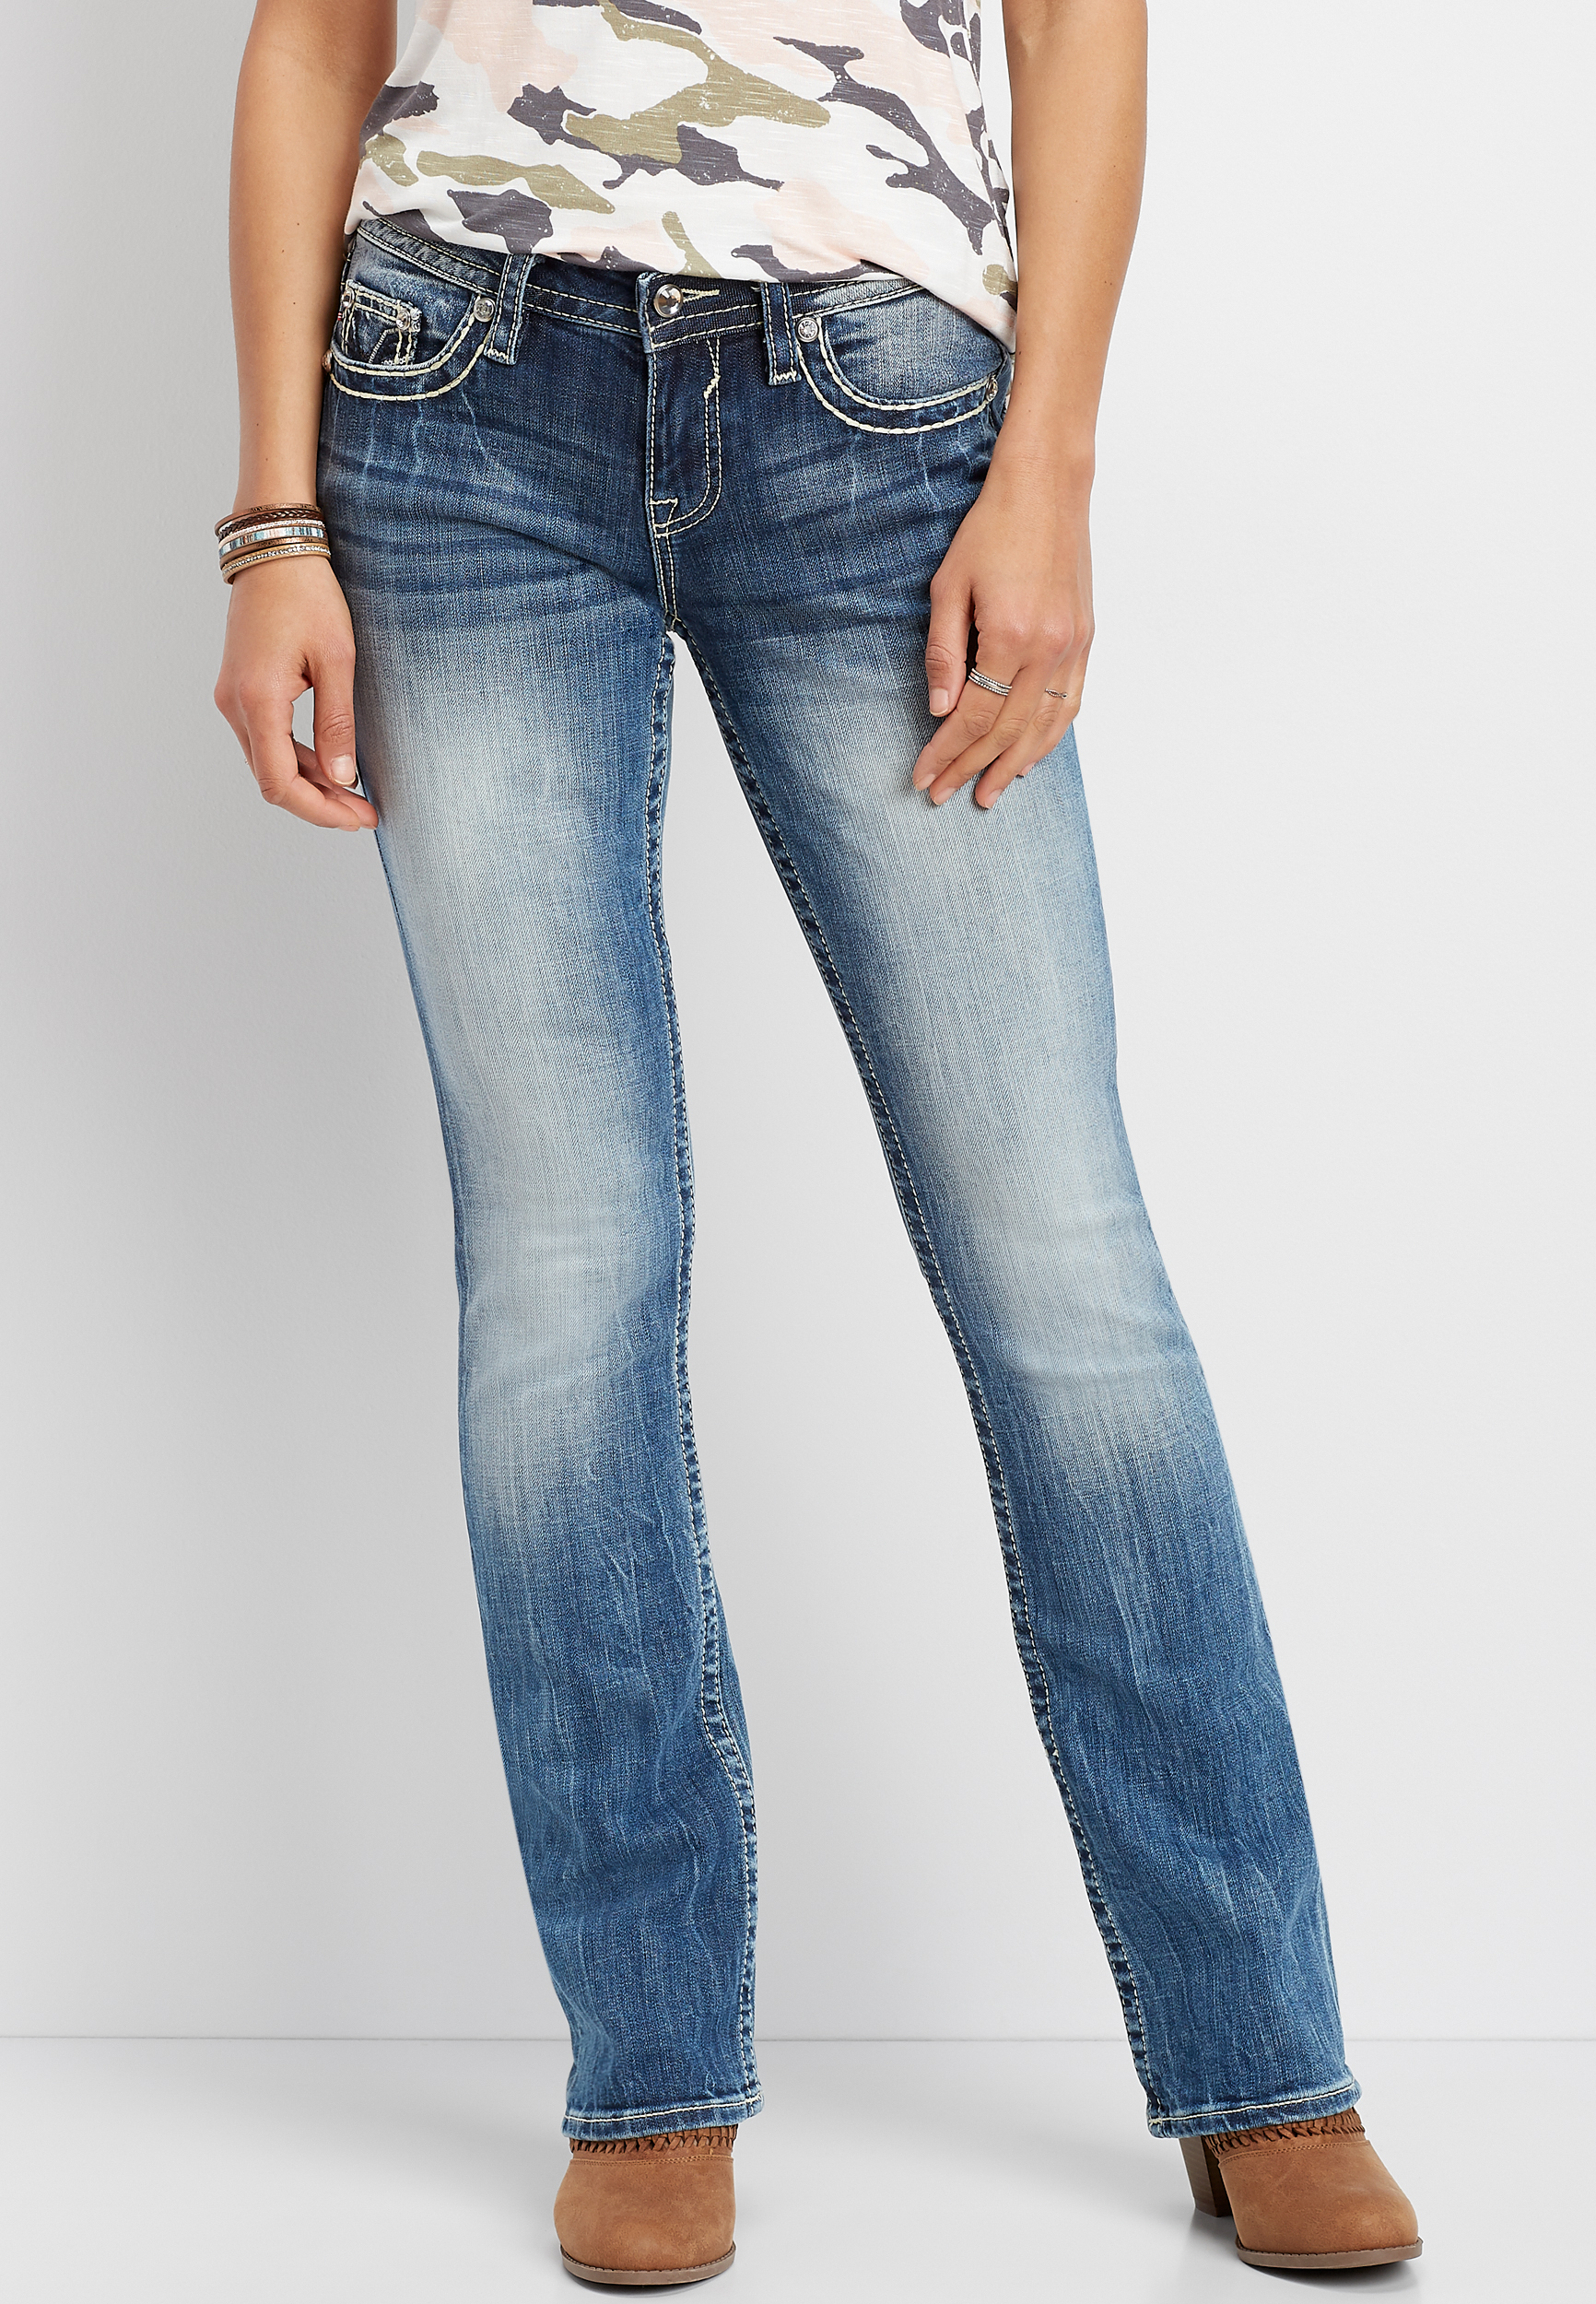 jeans with embellished pockets